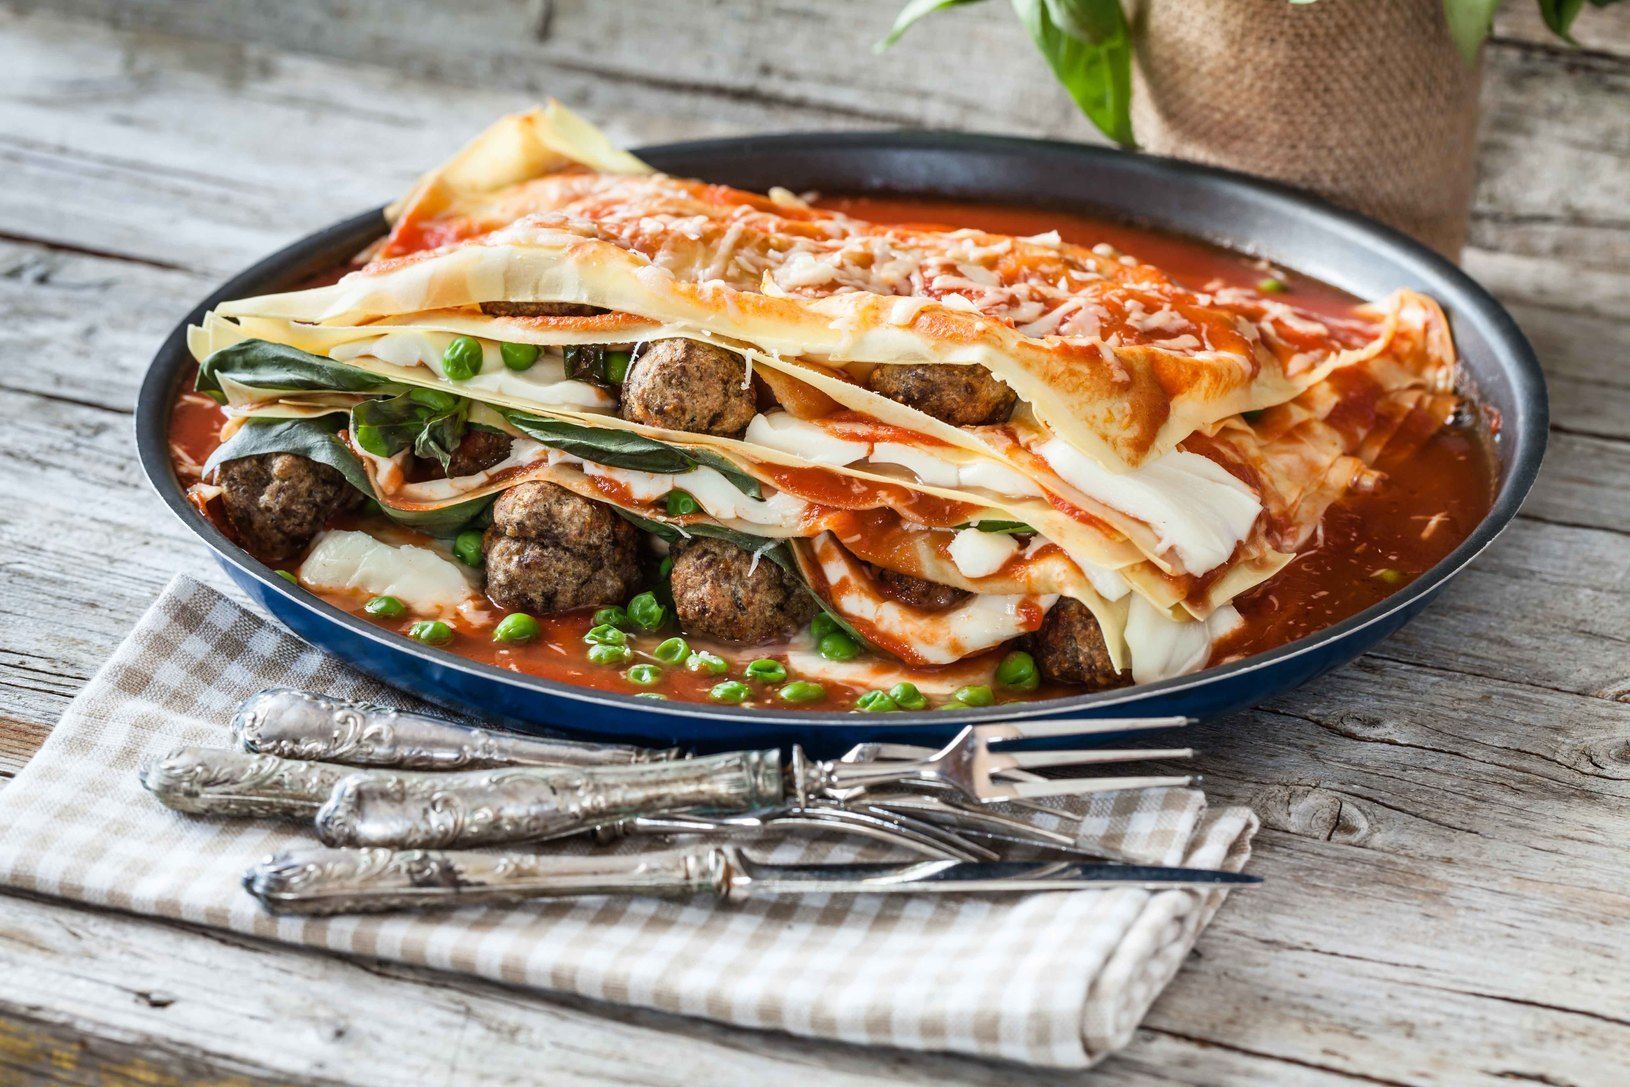 Лазанья наполетана кон рикотта е польпеттине (Lasagna napoletana con ricotta e polpettine) © Shutterstock